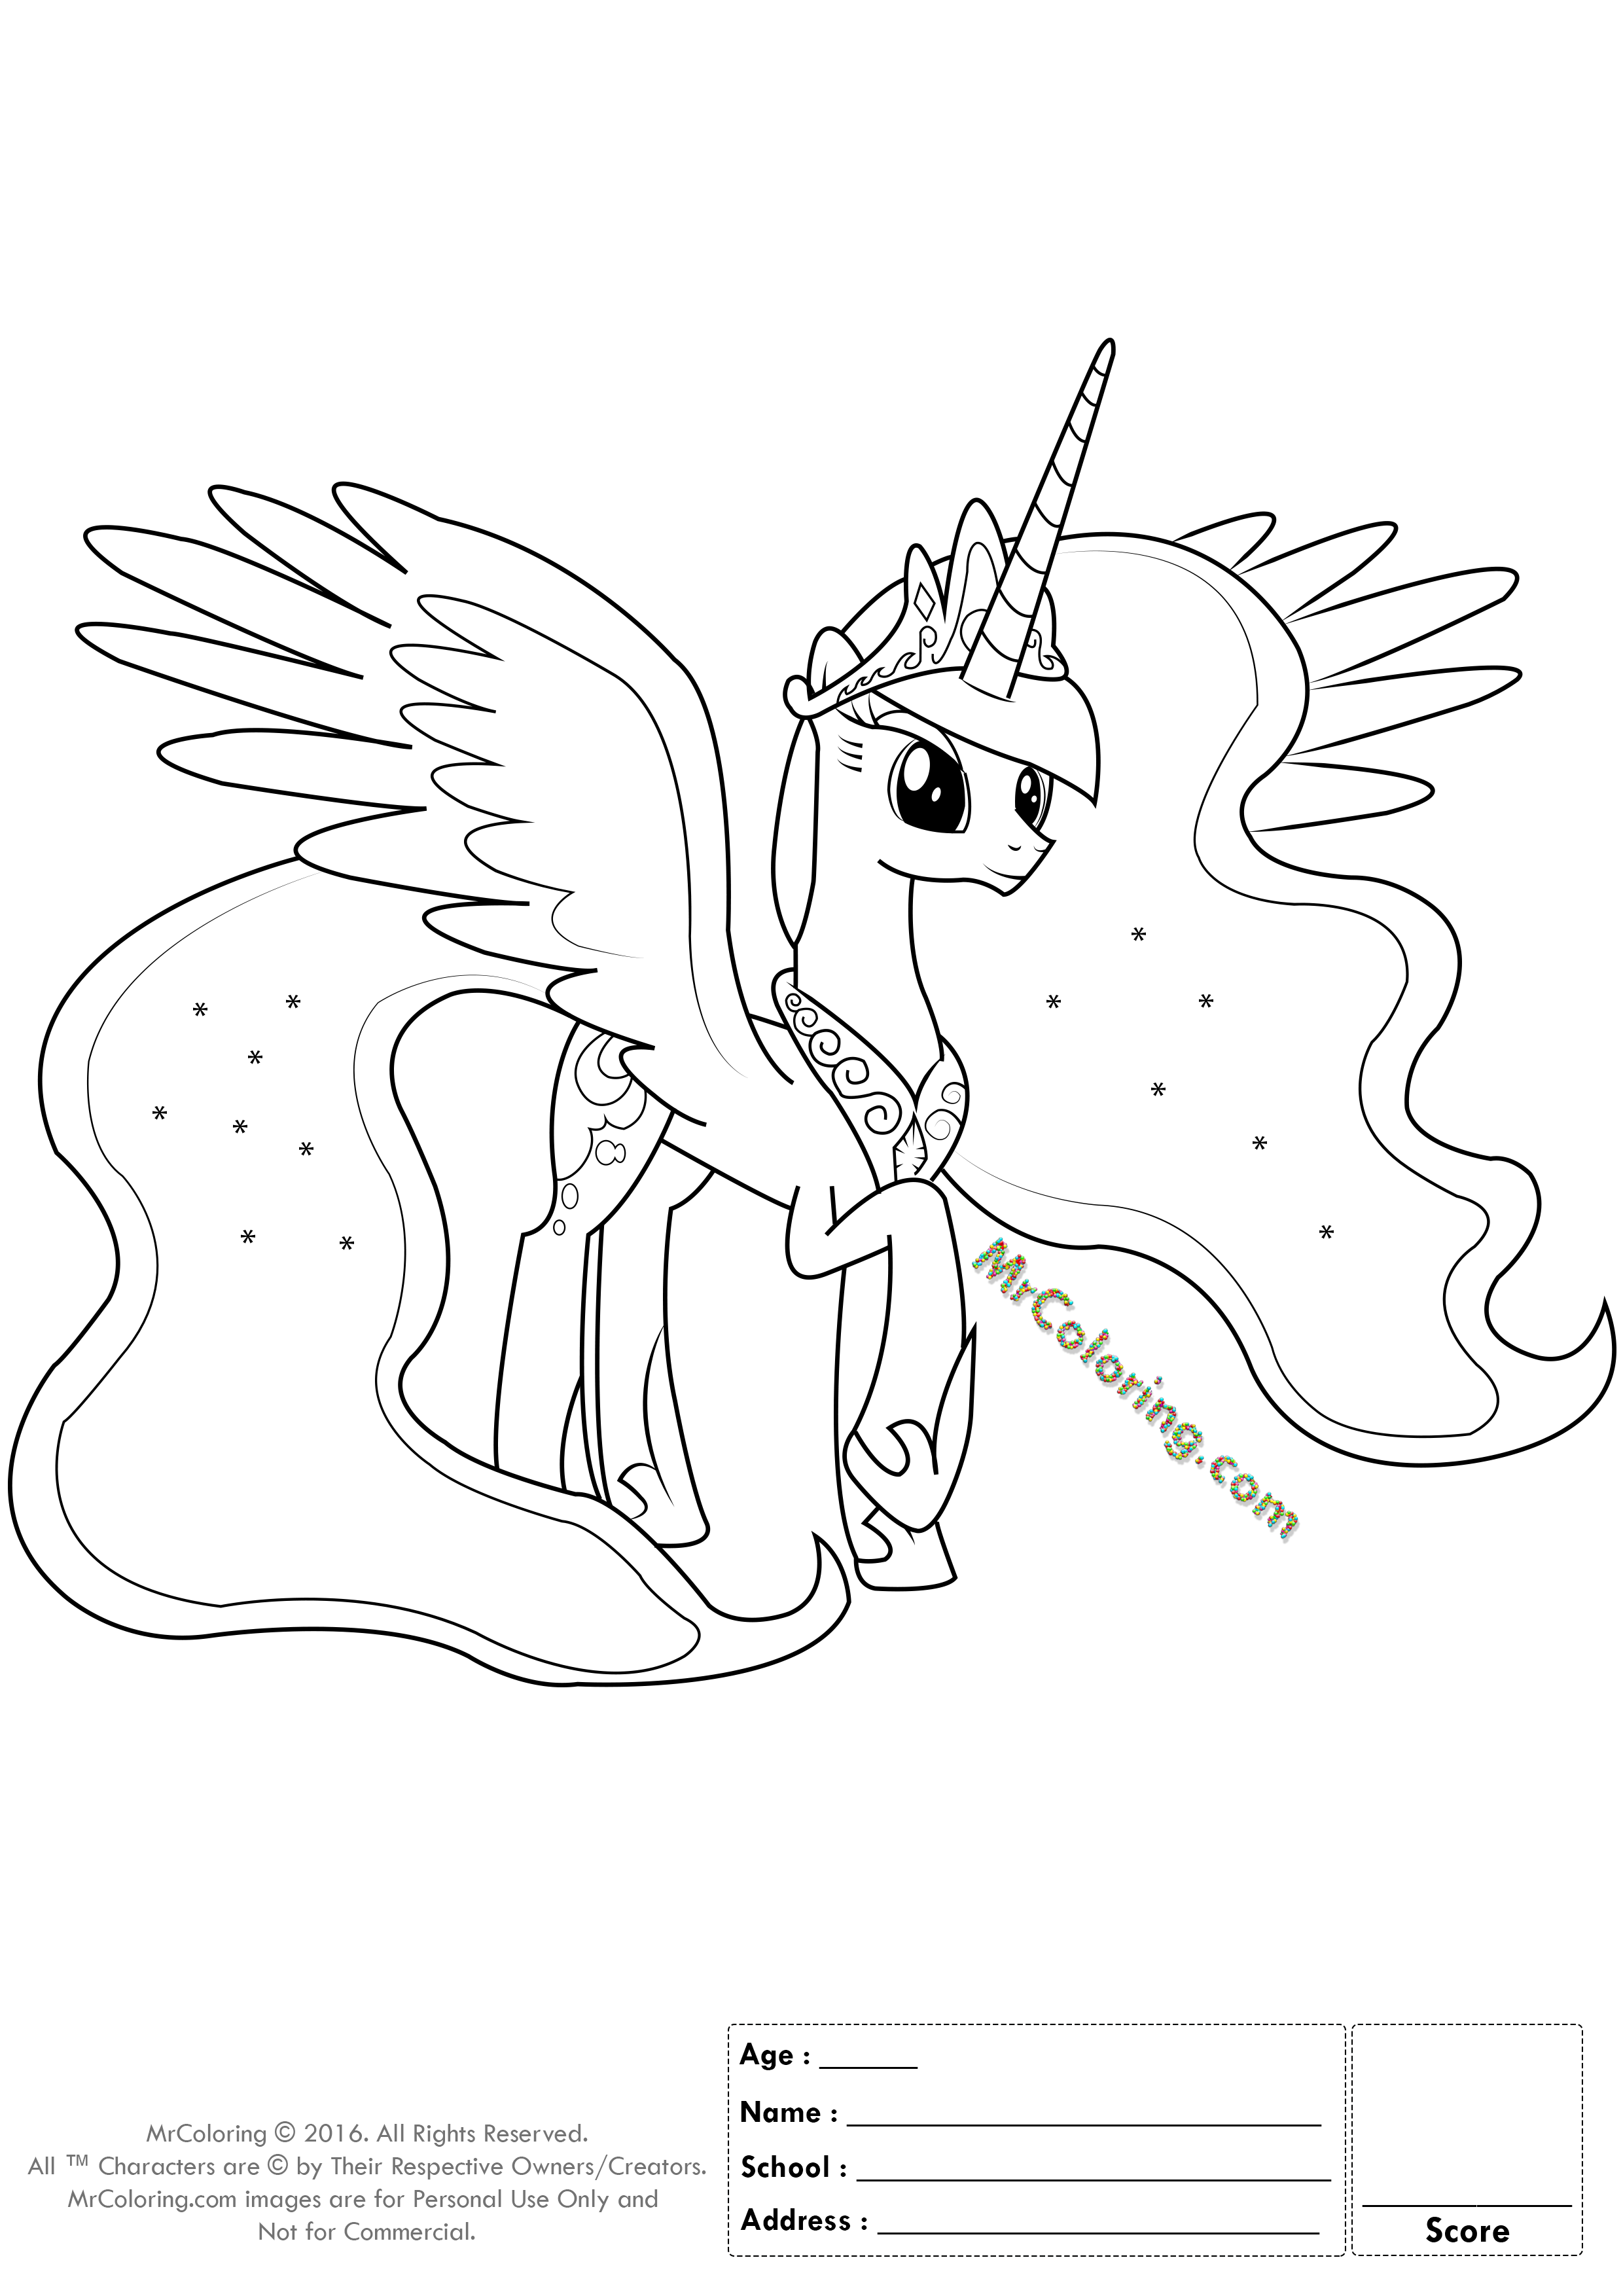 My Little Pony Princess Luna Coloring Page - 1 | MrColoring.com